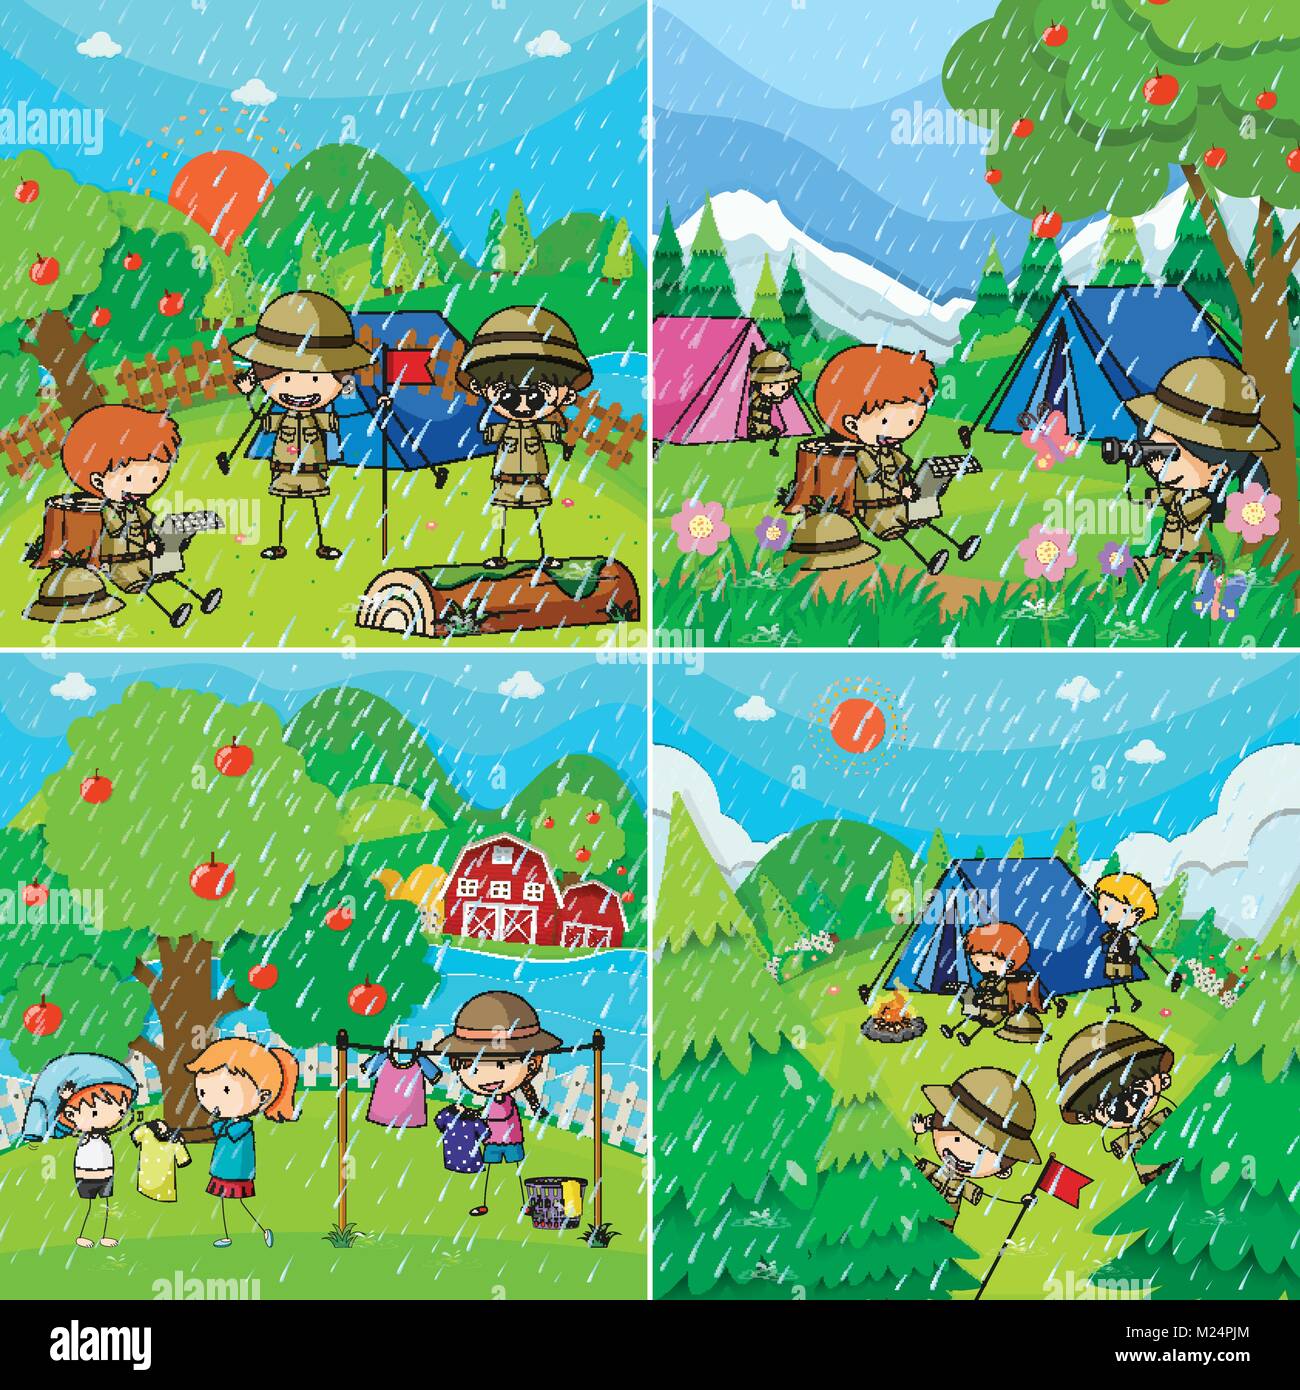 Children in four different scenes with rainy season illustration Stock Vector